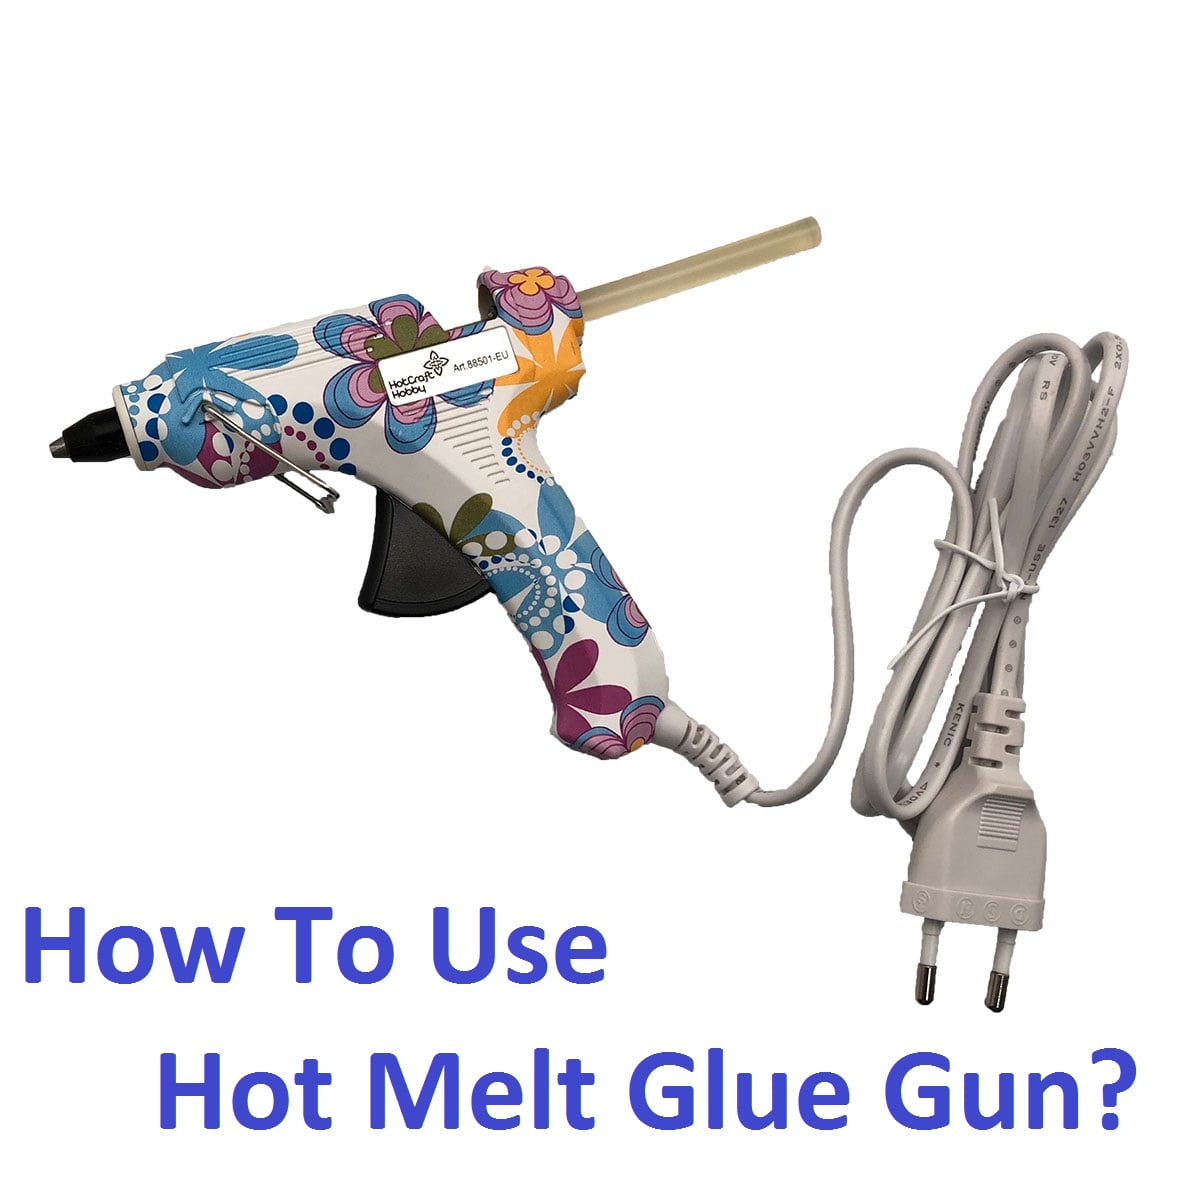 How To Use Hot Melt Glue Gun